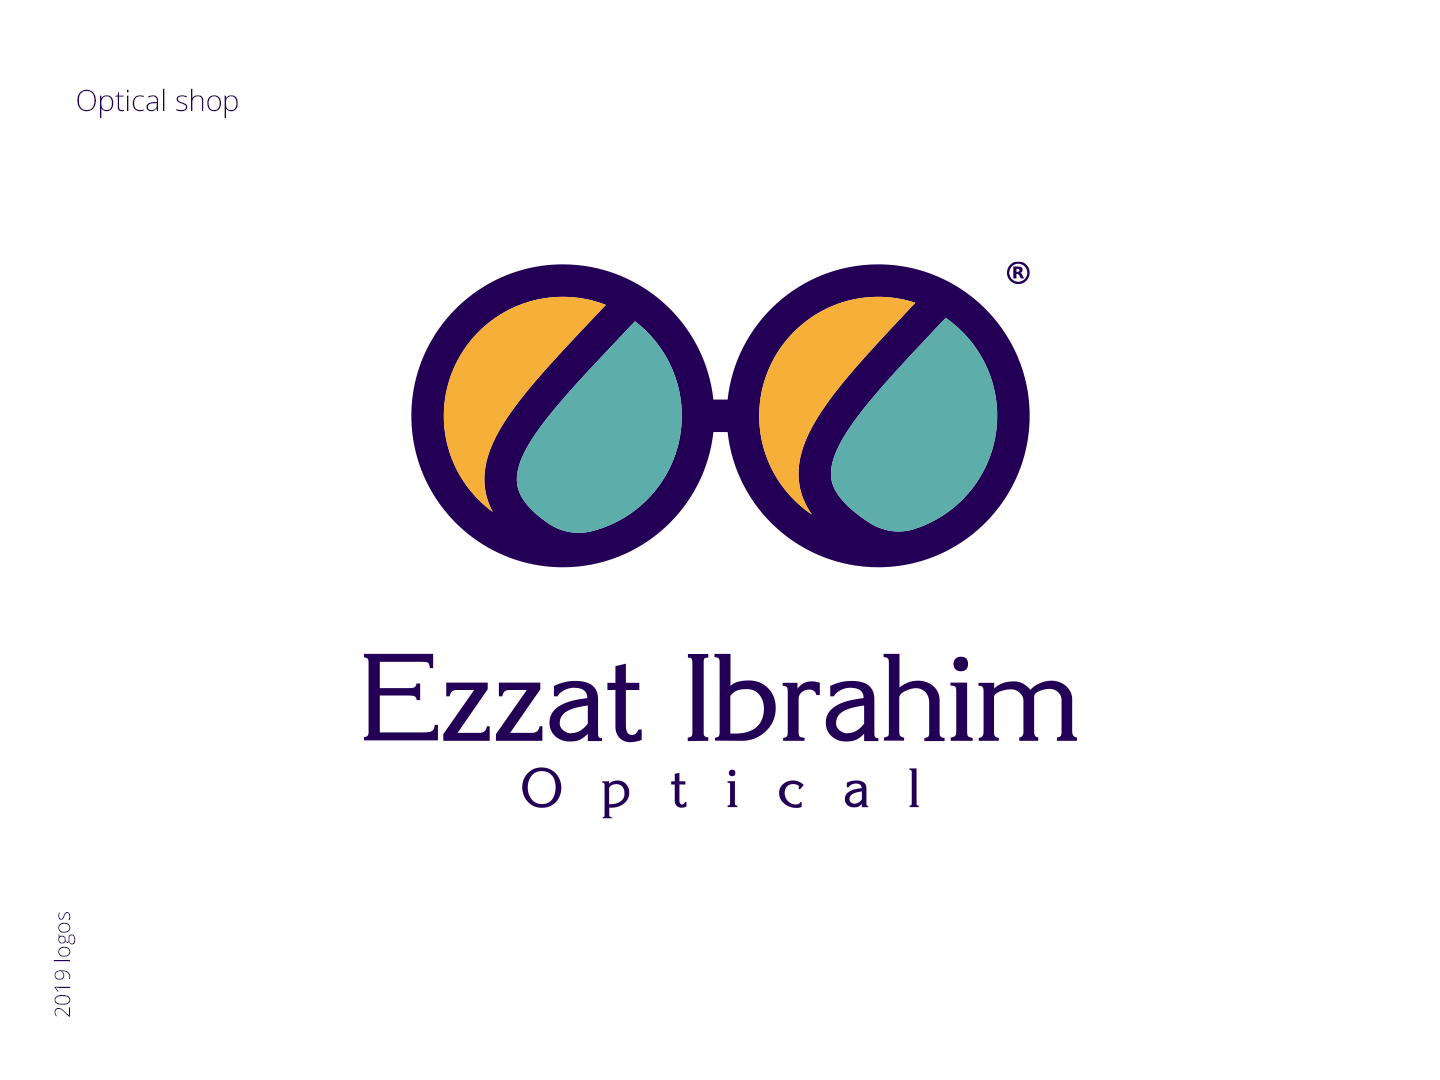 Optical Logo - Ezzat Ibrahim Optical - Logo Design by medo ismail on Dribbble